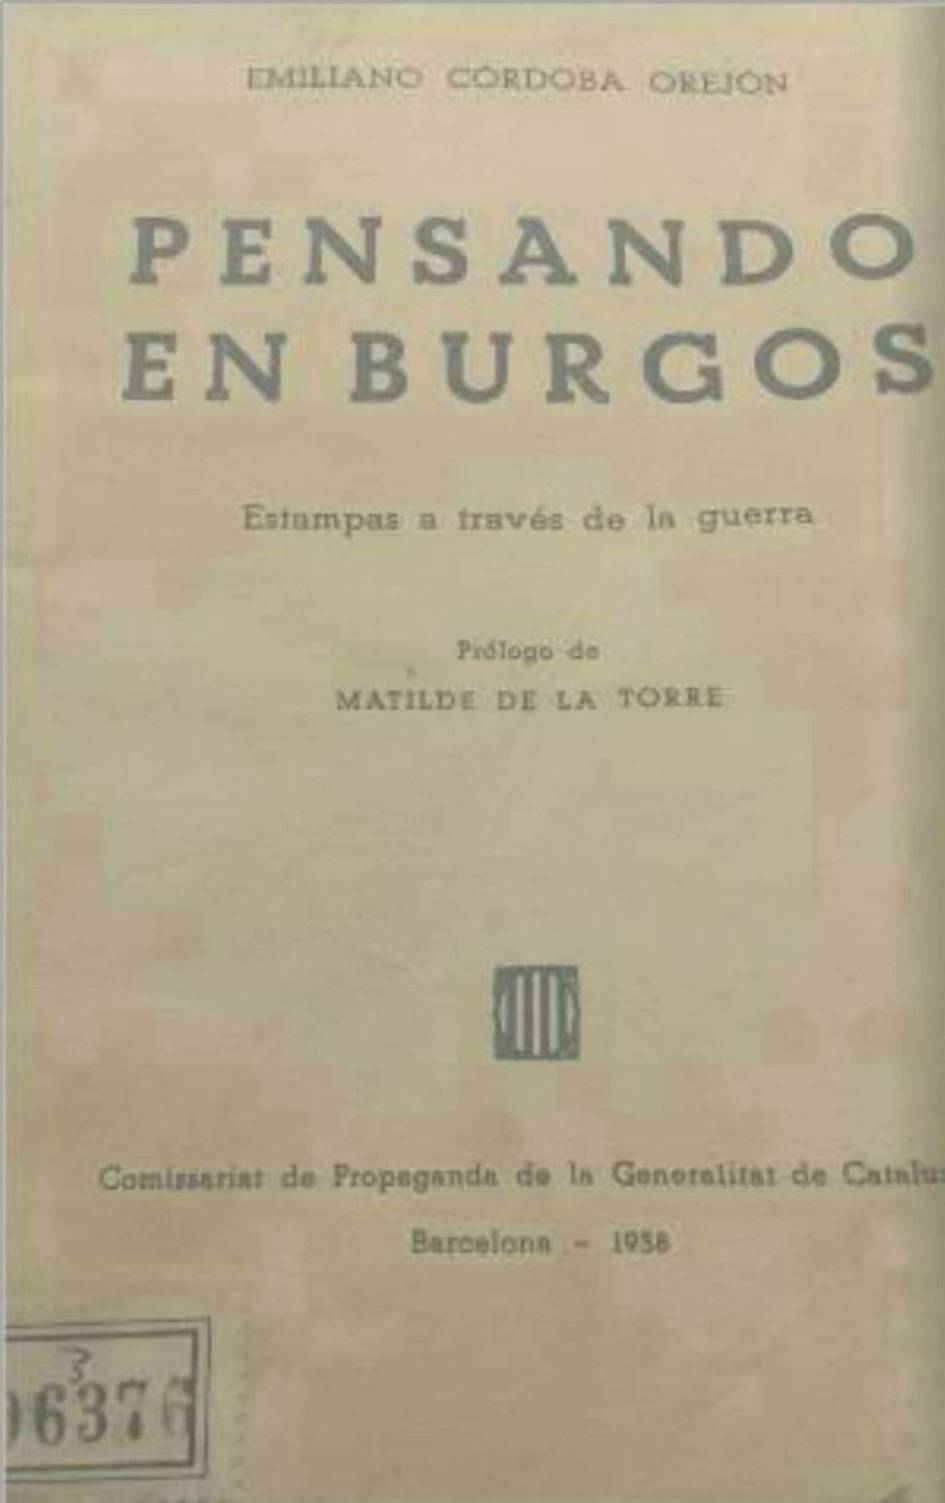 Portada del Libro  Pensando en Burgos de Emililano Córdoba